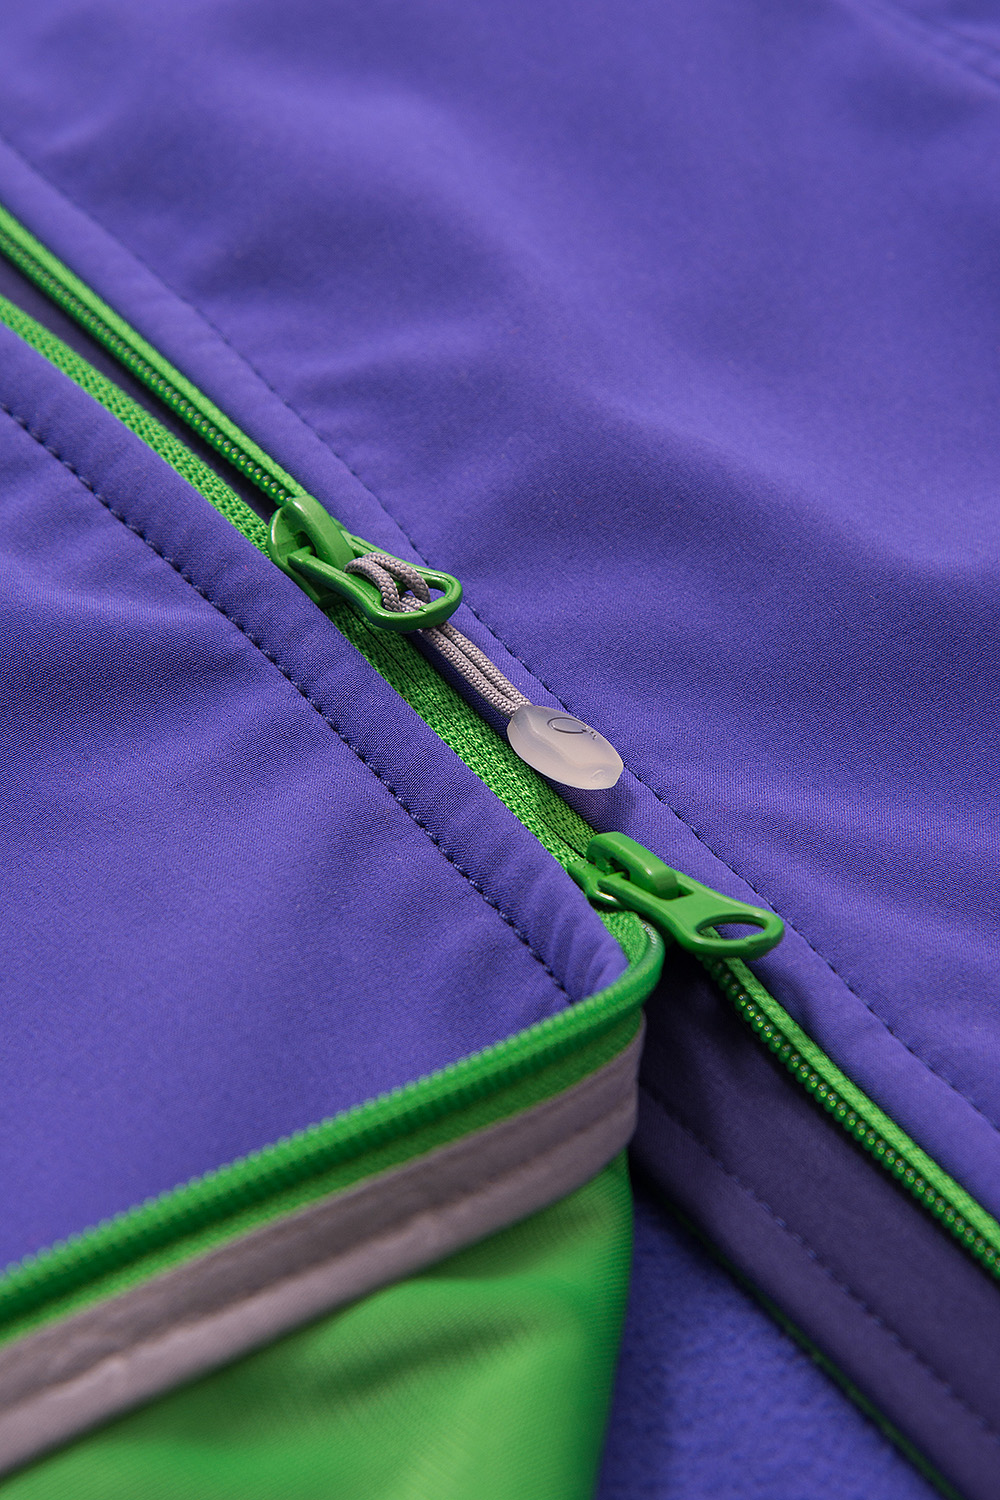 Куртка soft shell Selin от производителя outdoor одежды O3 Ozone